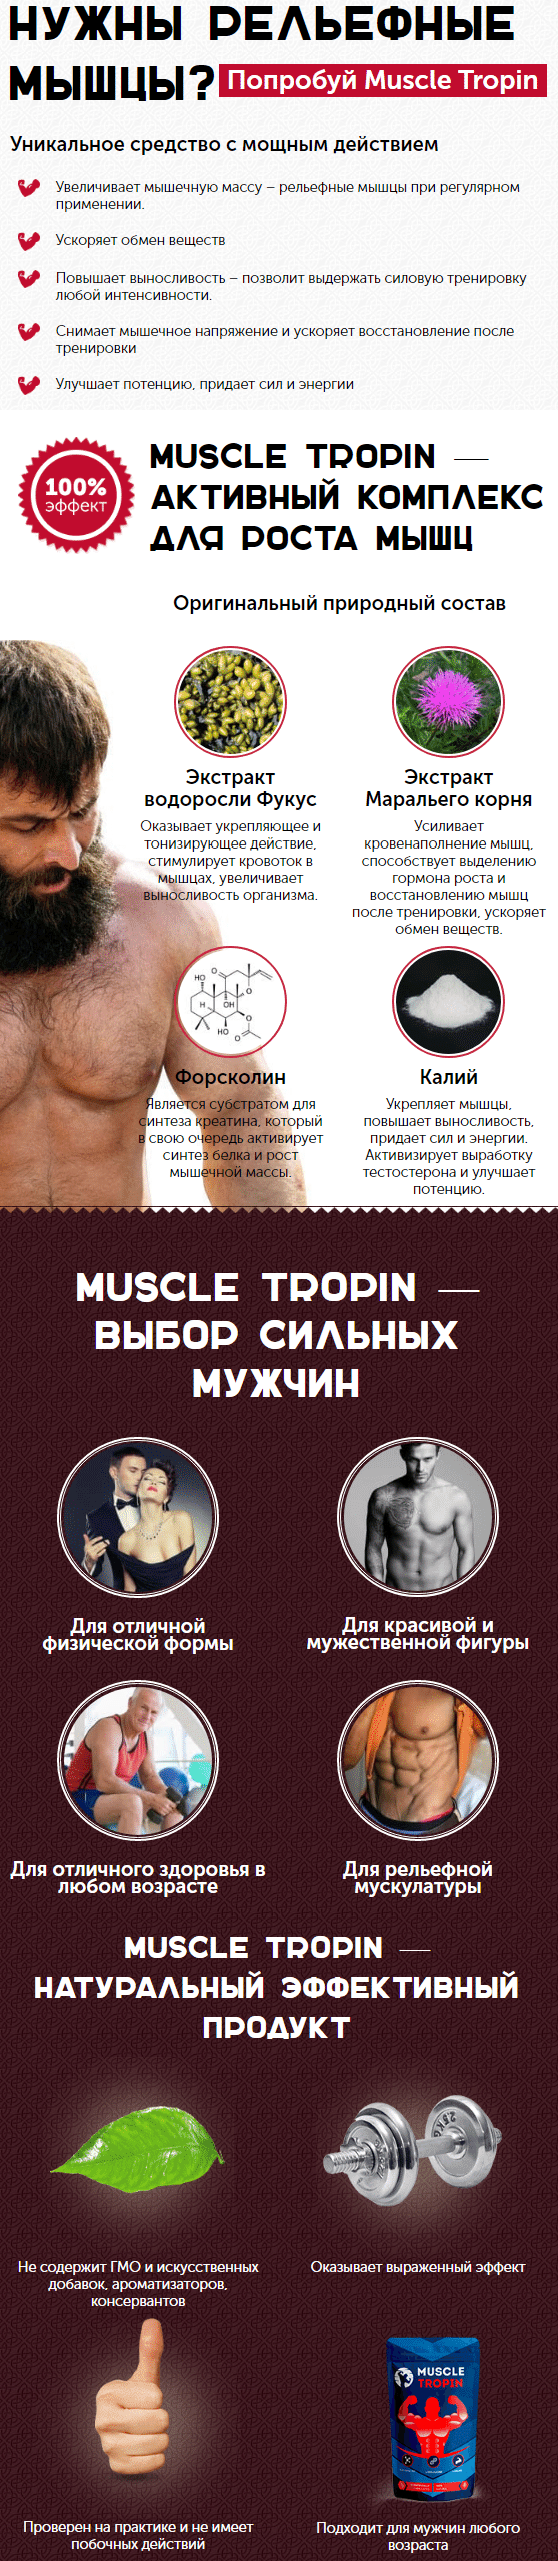 Muscle Tropin (Мускул Тропин) средство для сжигания жира у мужчин купить